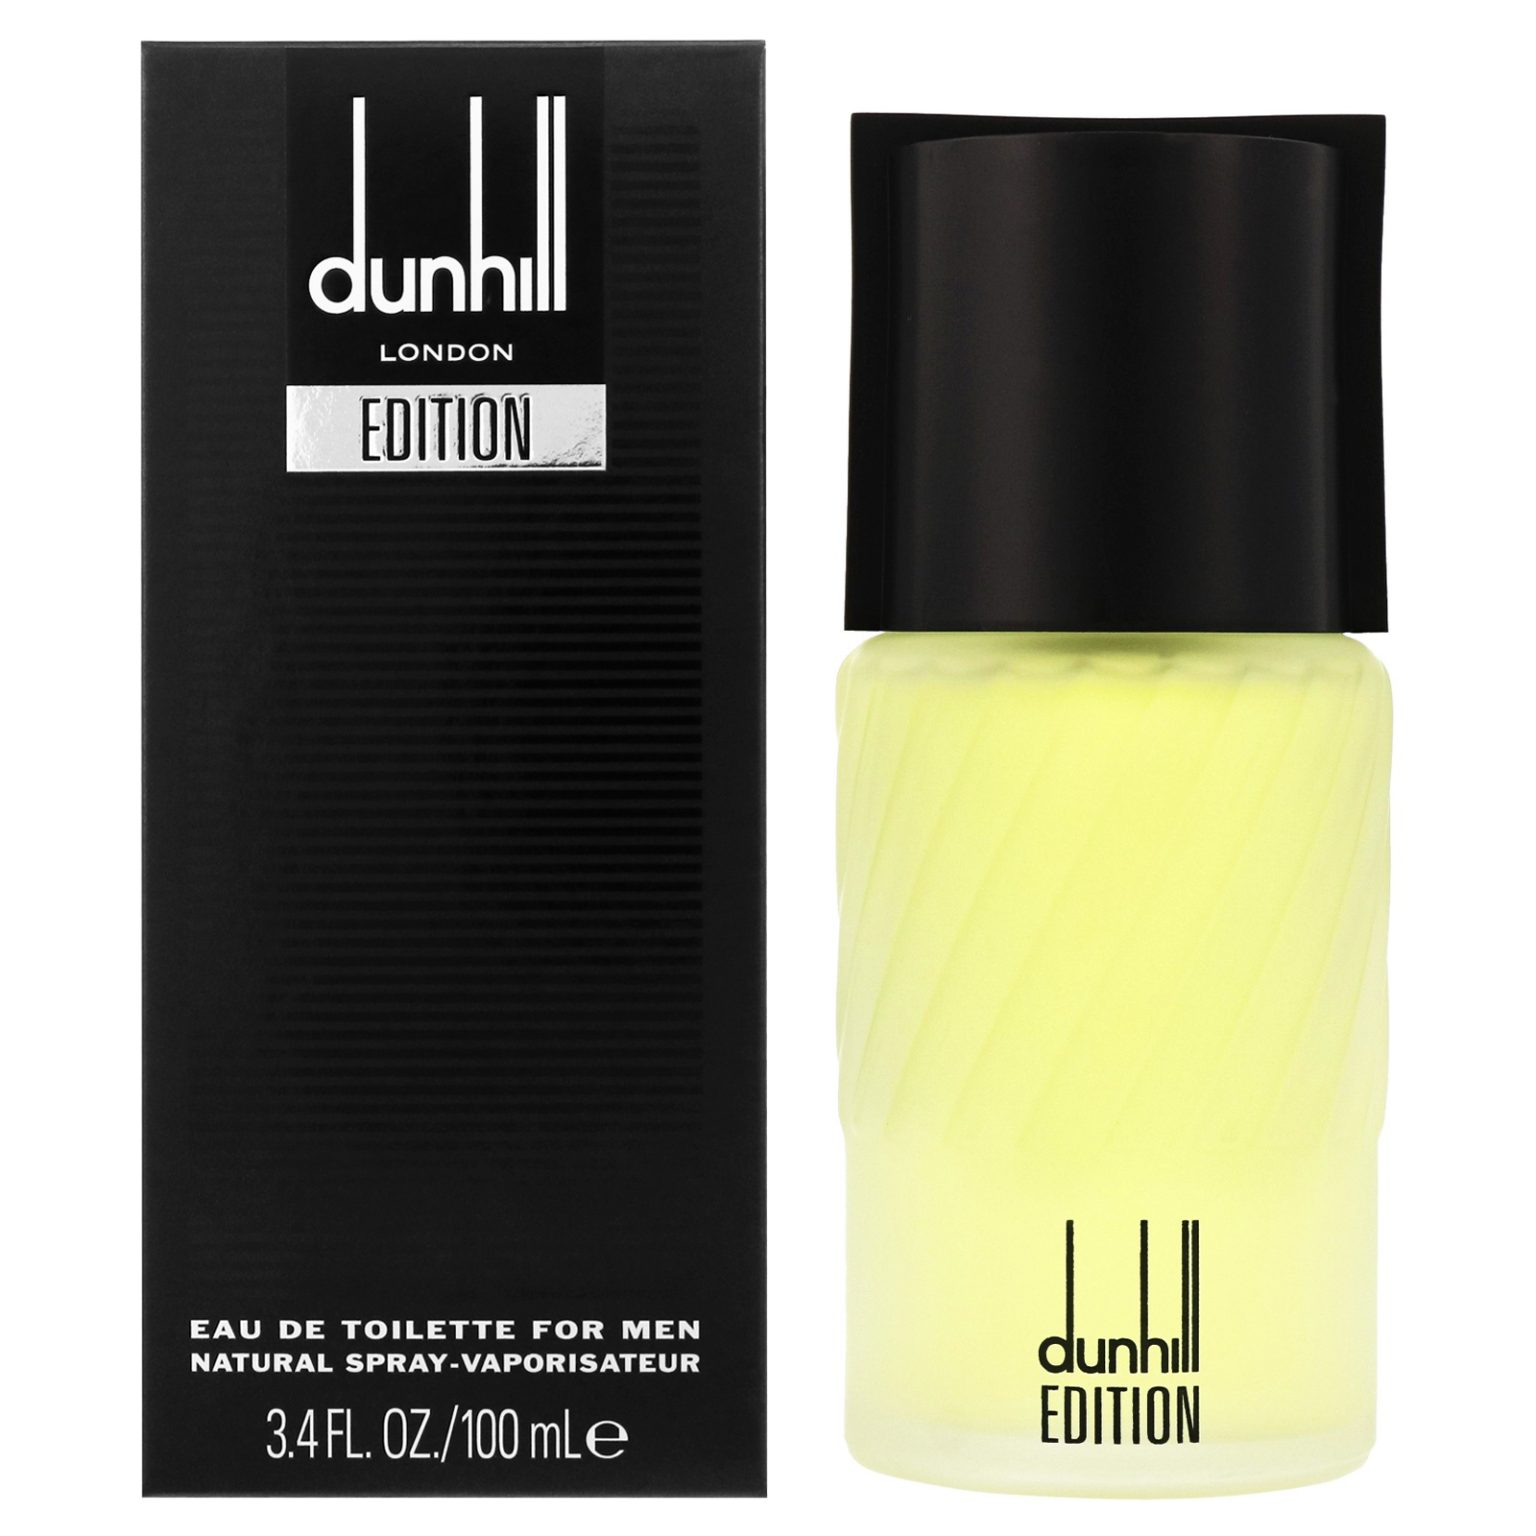 DUNHILL LONDON EDITION EDT 100ML FOR MEN - Perfume Bangladesh